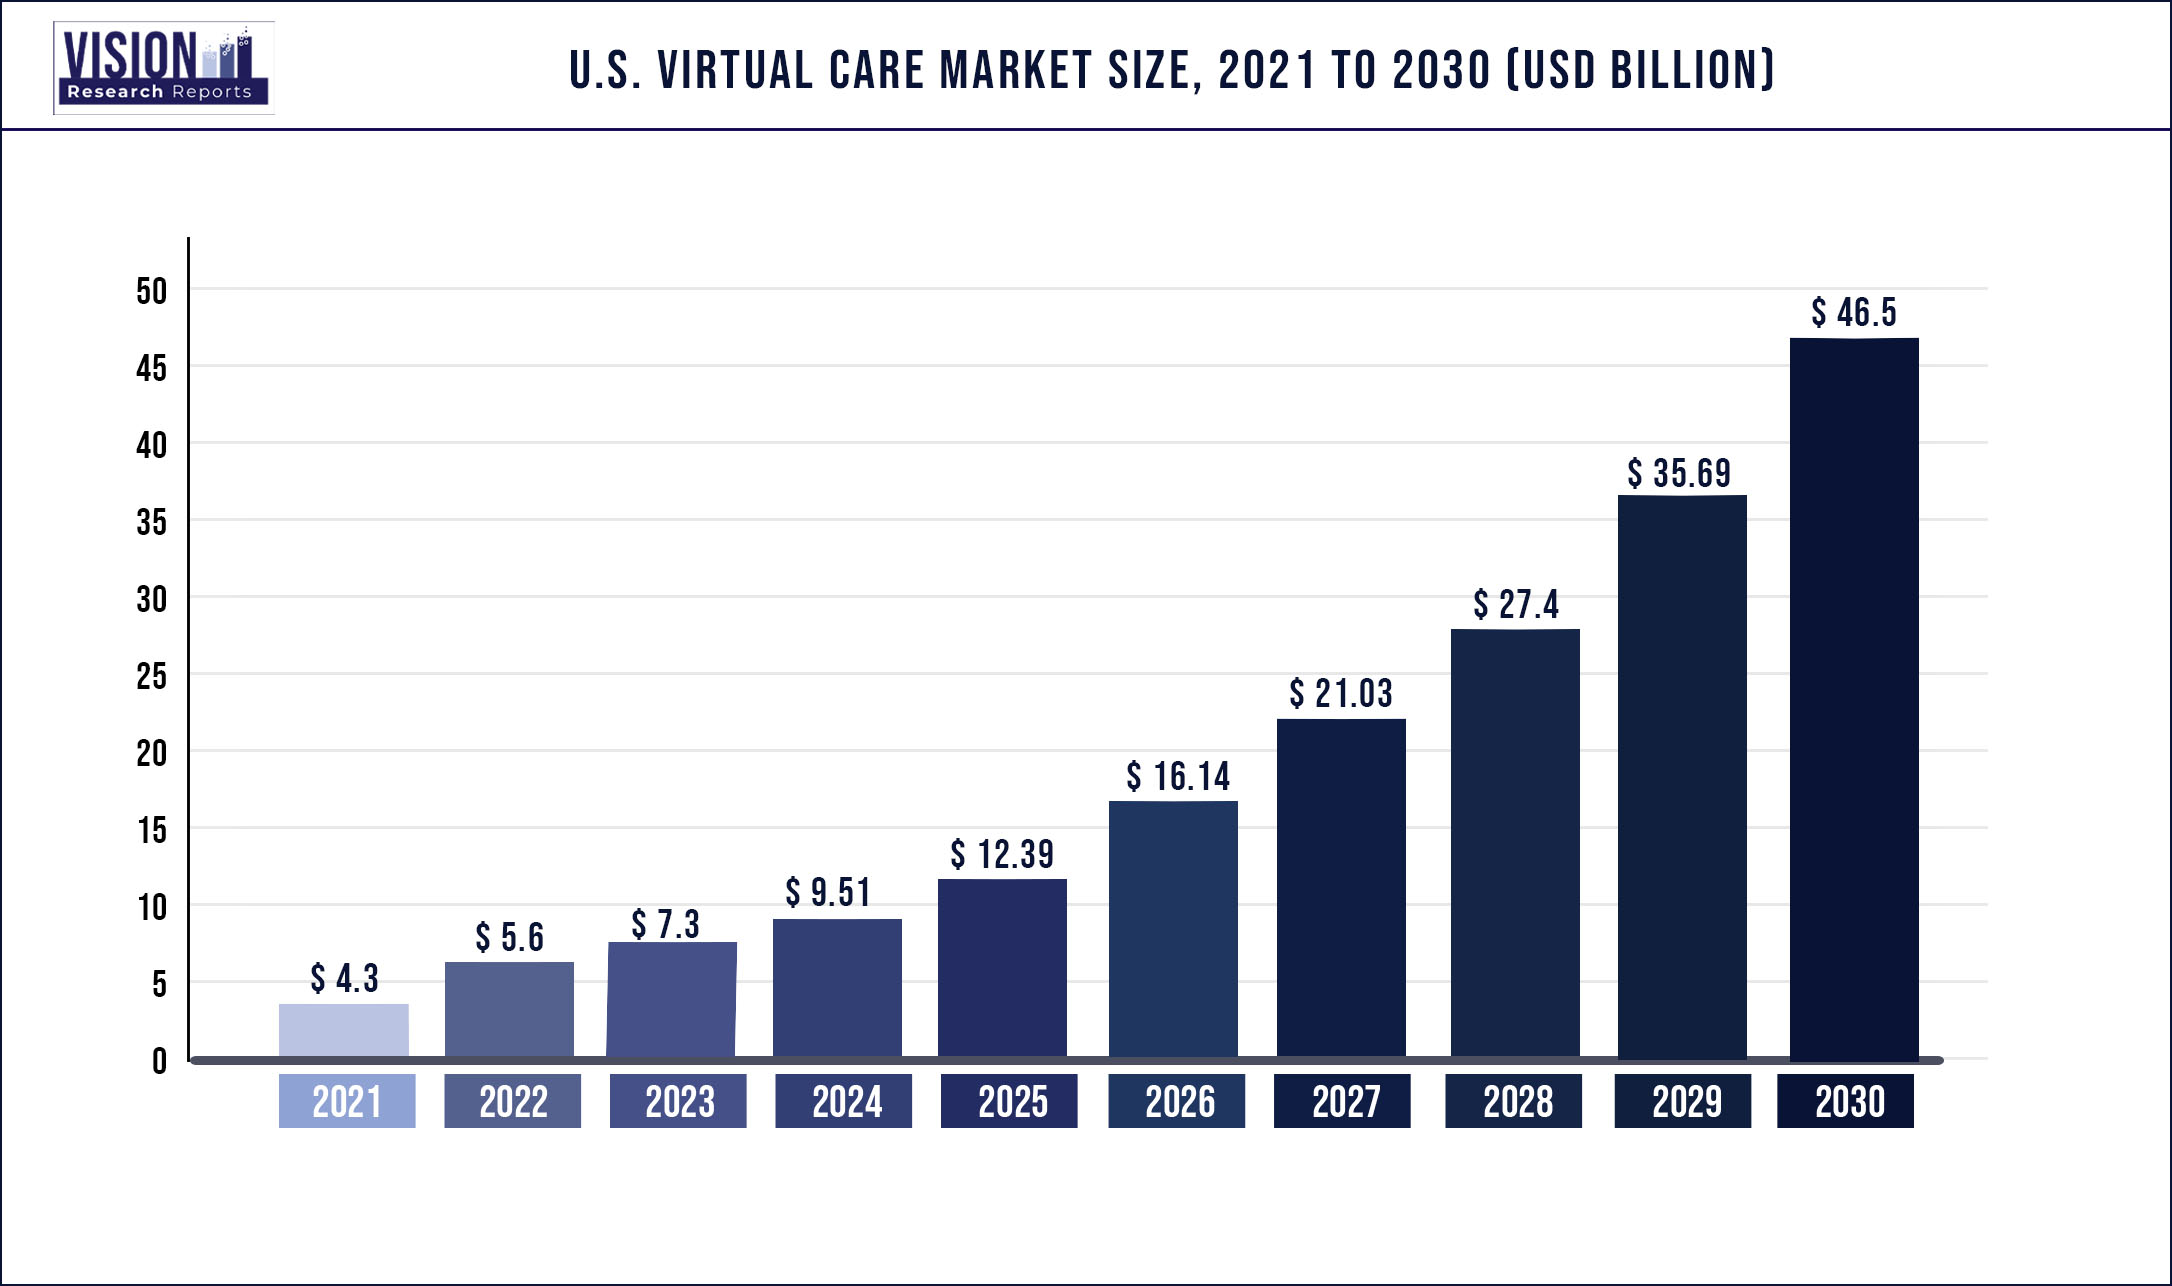 U.S. Virtual Care Market Size 2021 to 2030